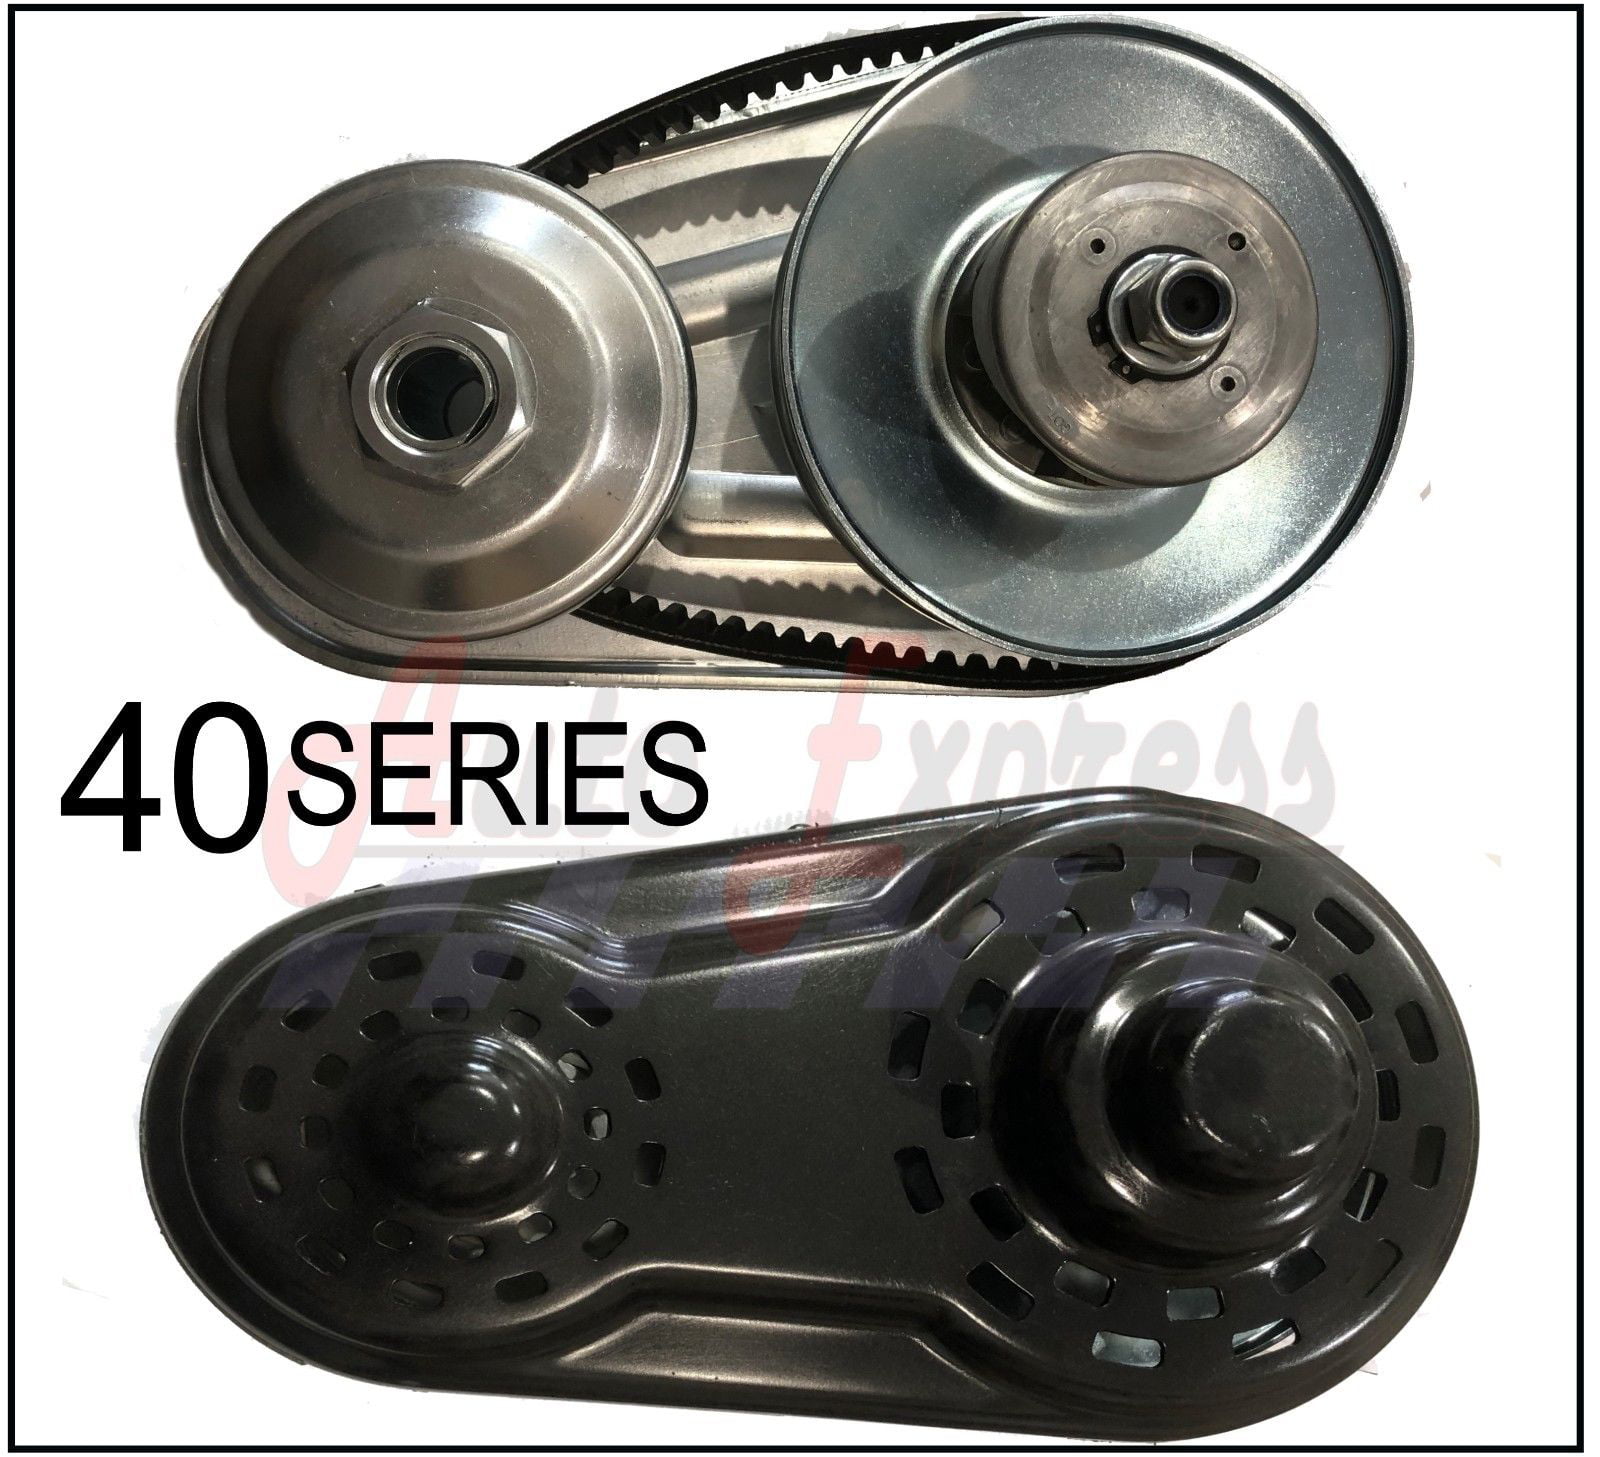 40 Series Clutch Pulley 209151 203015 Fit 9-16HP Go Kart Torque Converter Kit